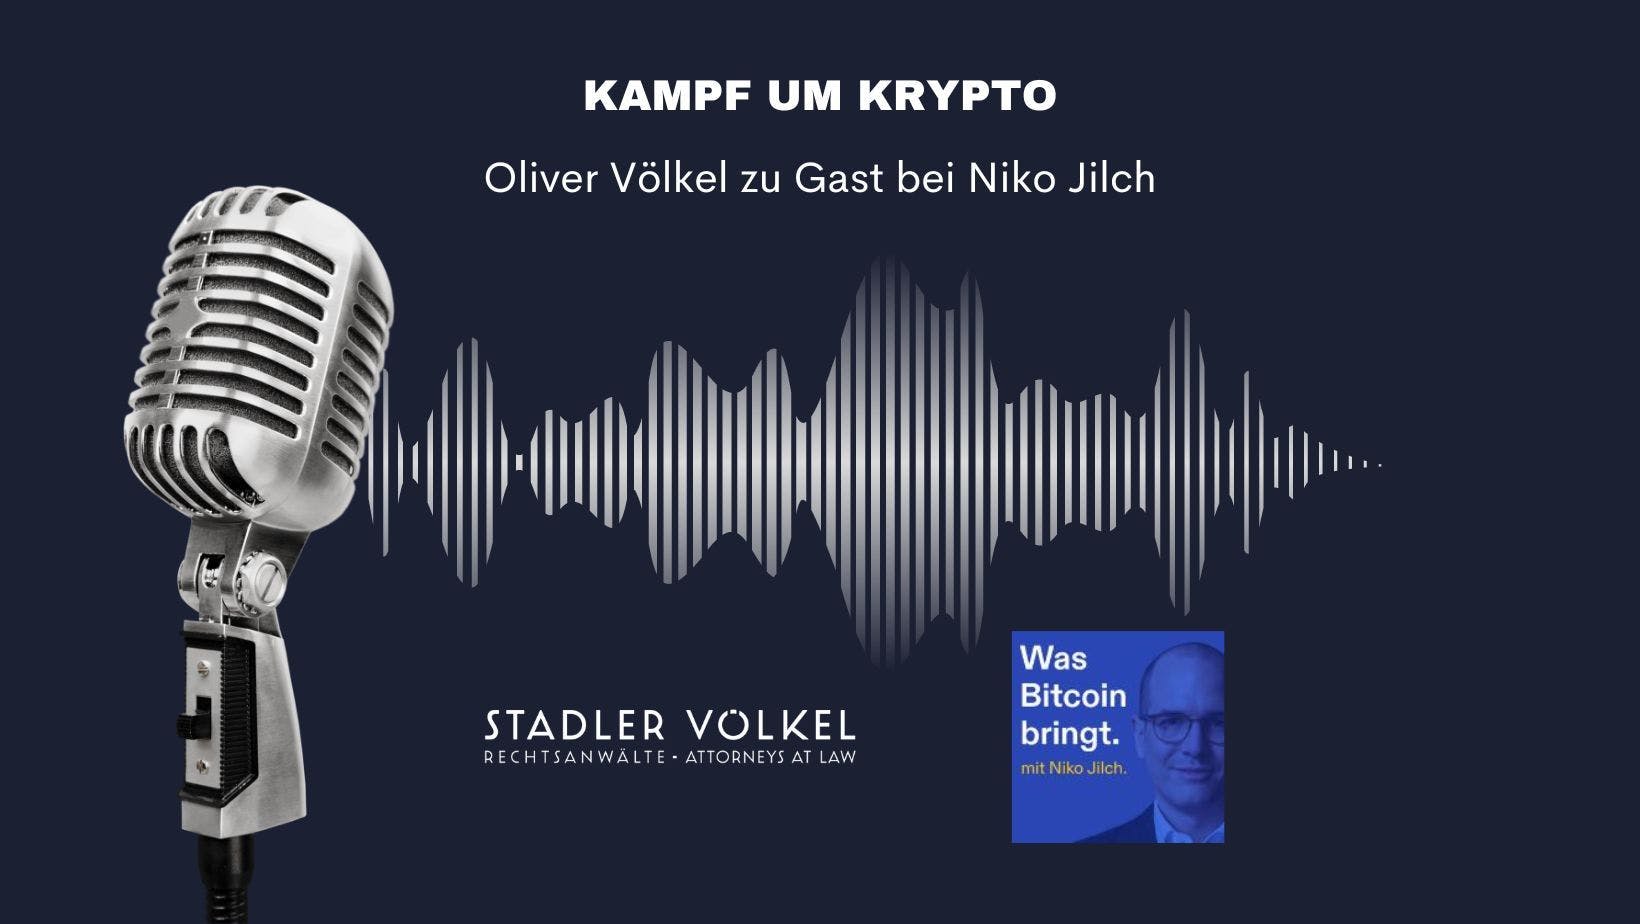 Oliver Völkel on Niko Jilch's podcast: "Was Bitcoin bringt"